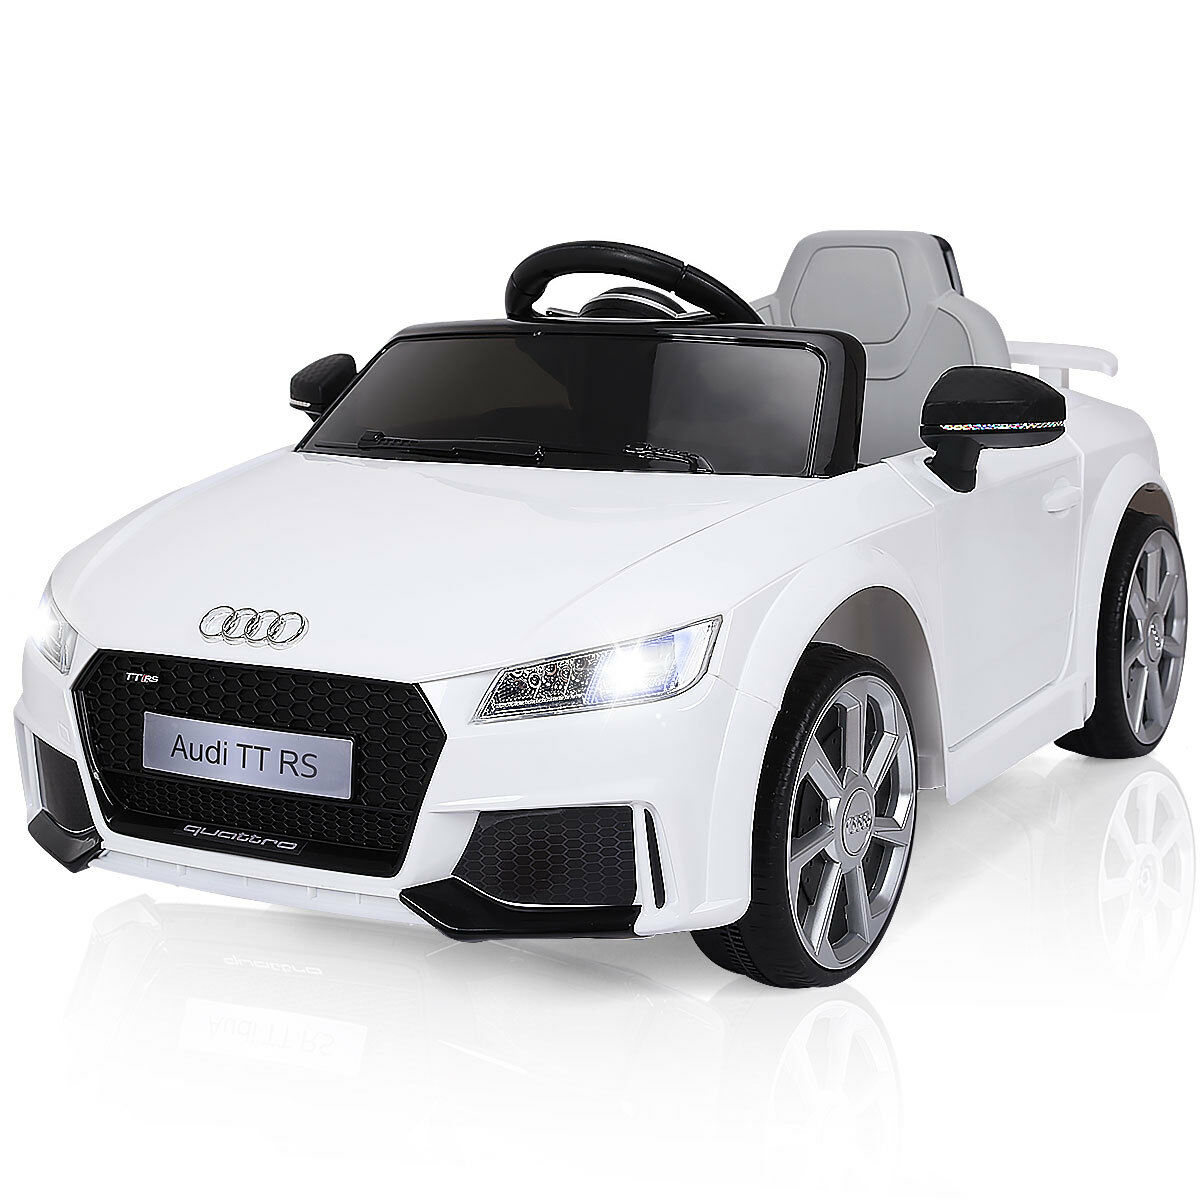 12V Audi TT RS Electric Kids Ride On Car Licensed Remote Control MP3 - White